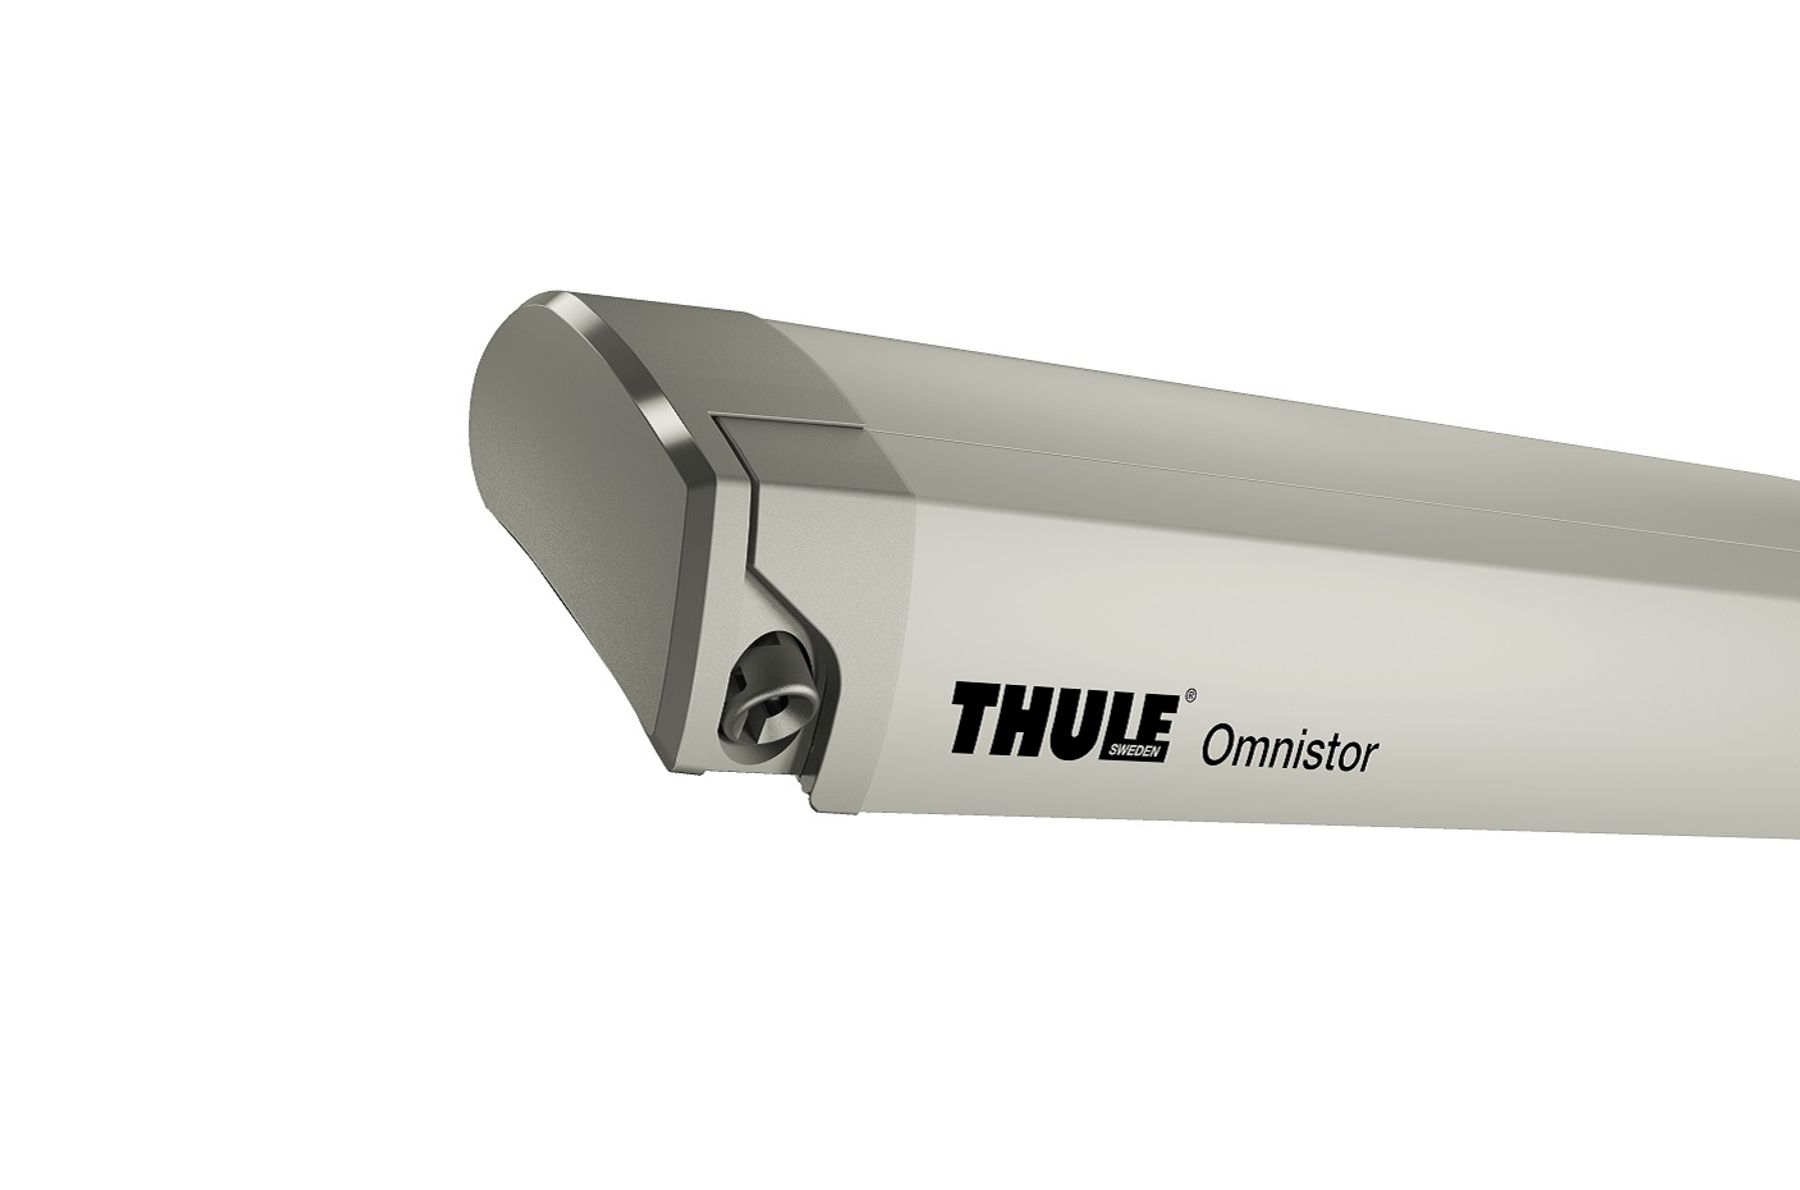 Thule omnistor 9200 awning caravan motorhome roof mounted cassette cream